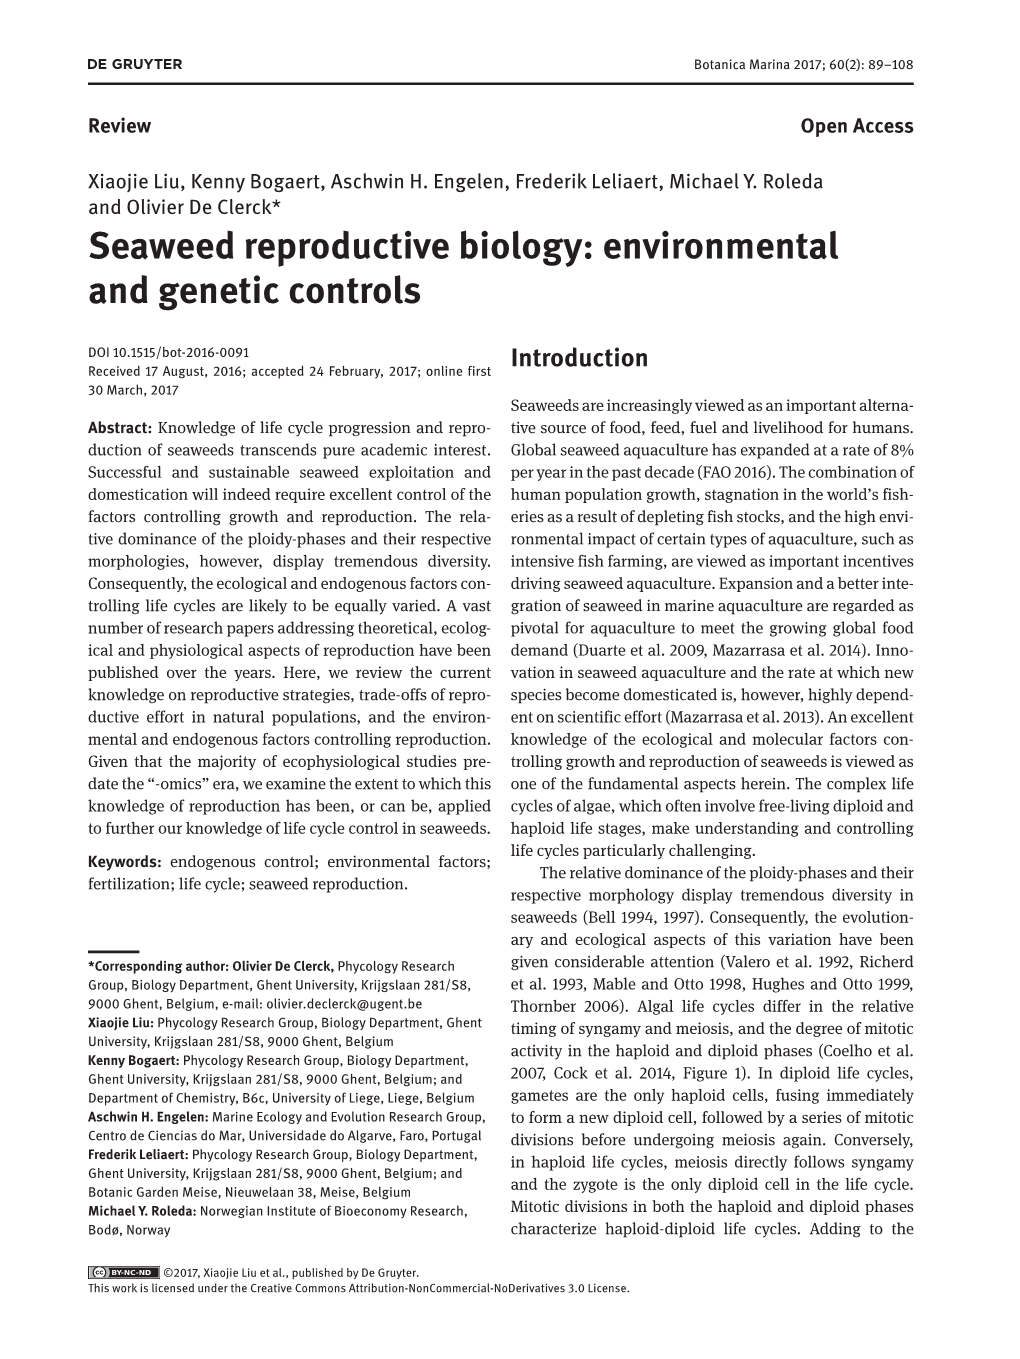 Seaweed Reproductive Biology: Environmental and Genetic Controls